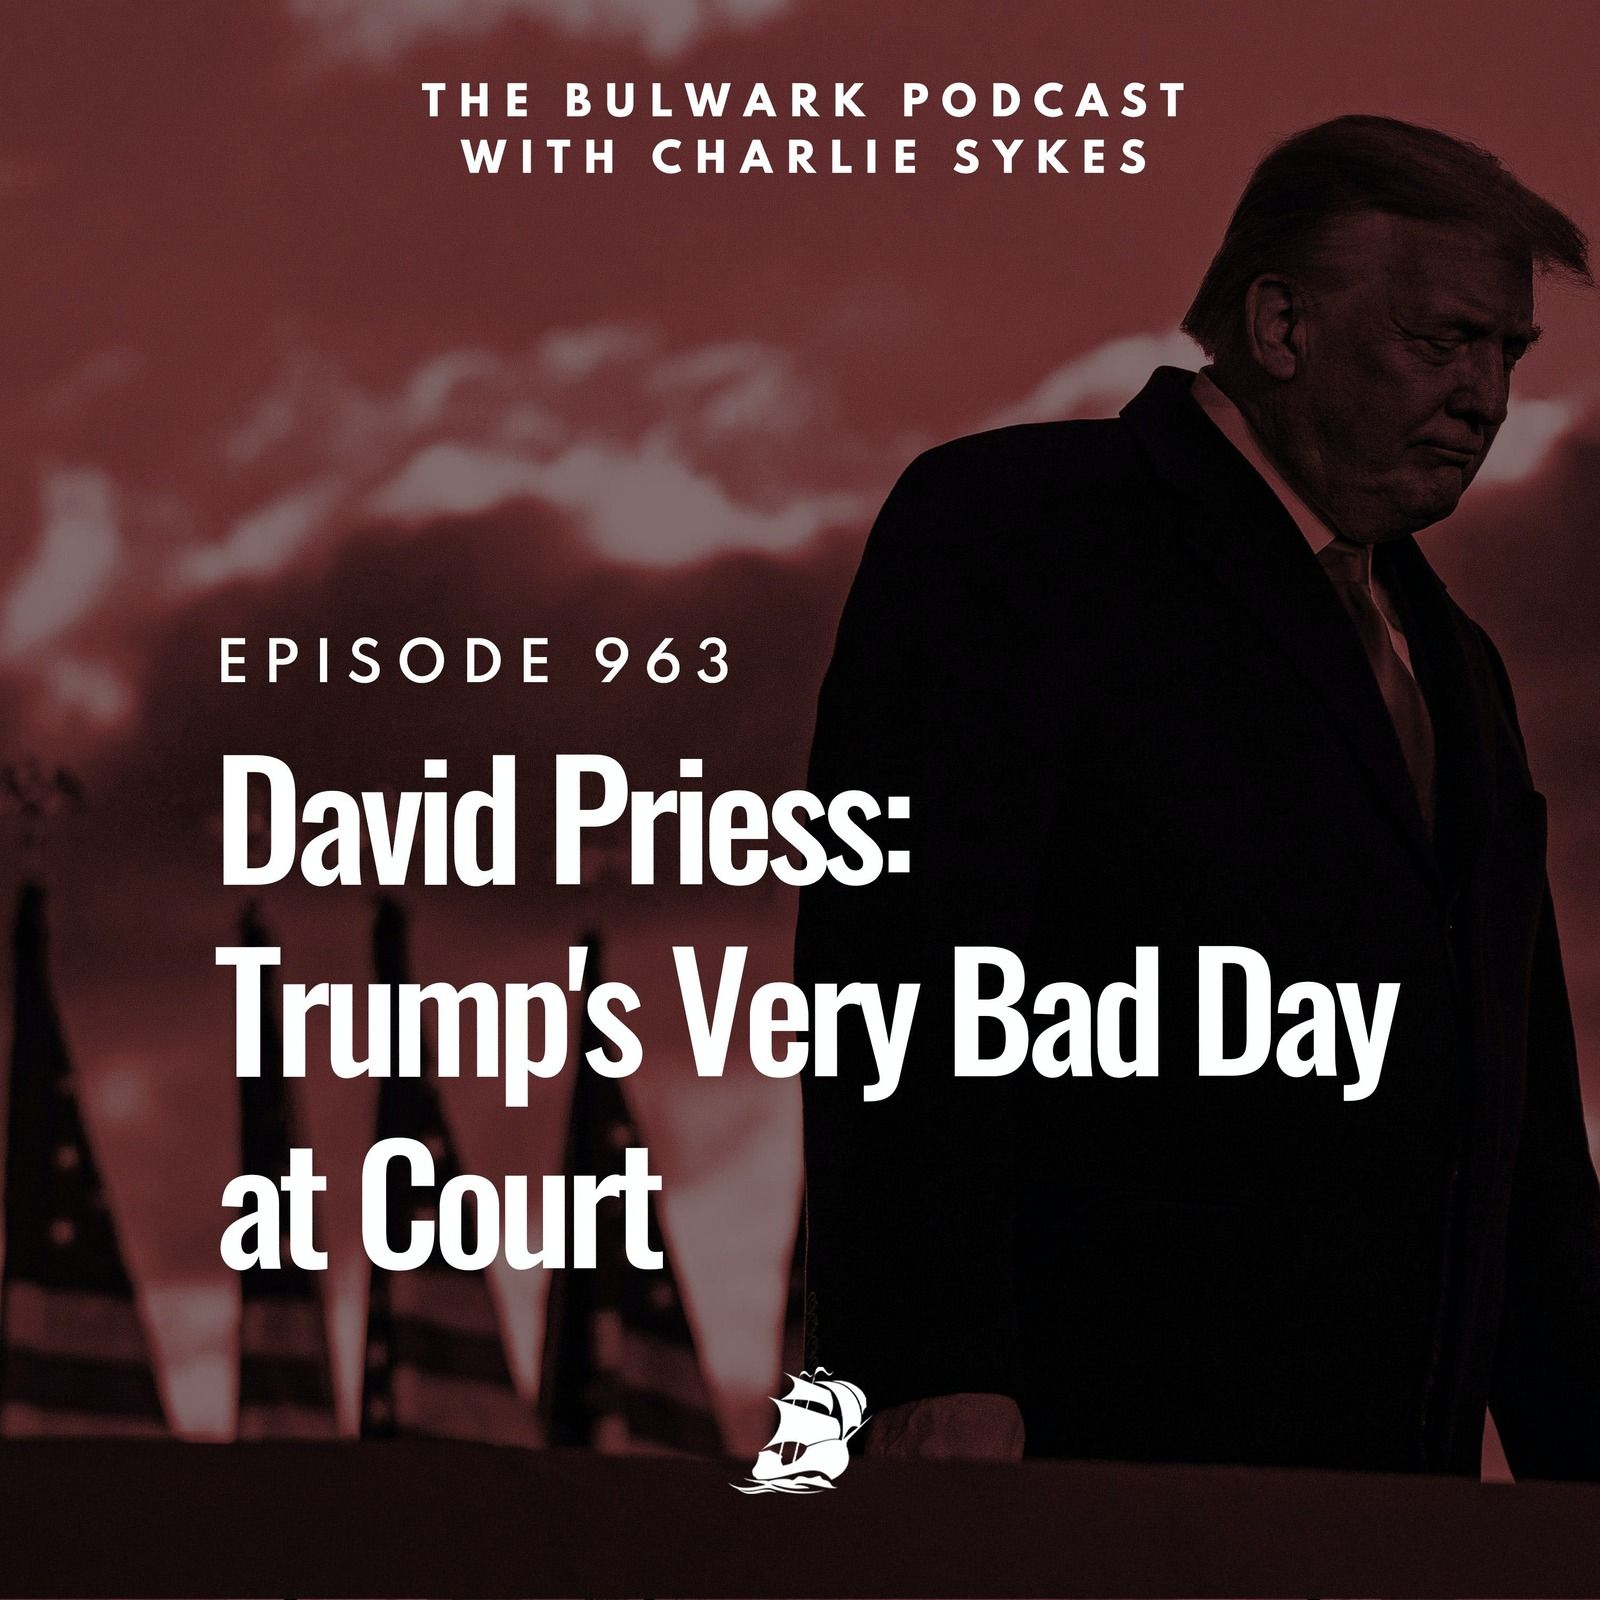 David Priess: Trump's Very Bad Day at Court